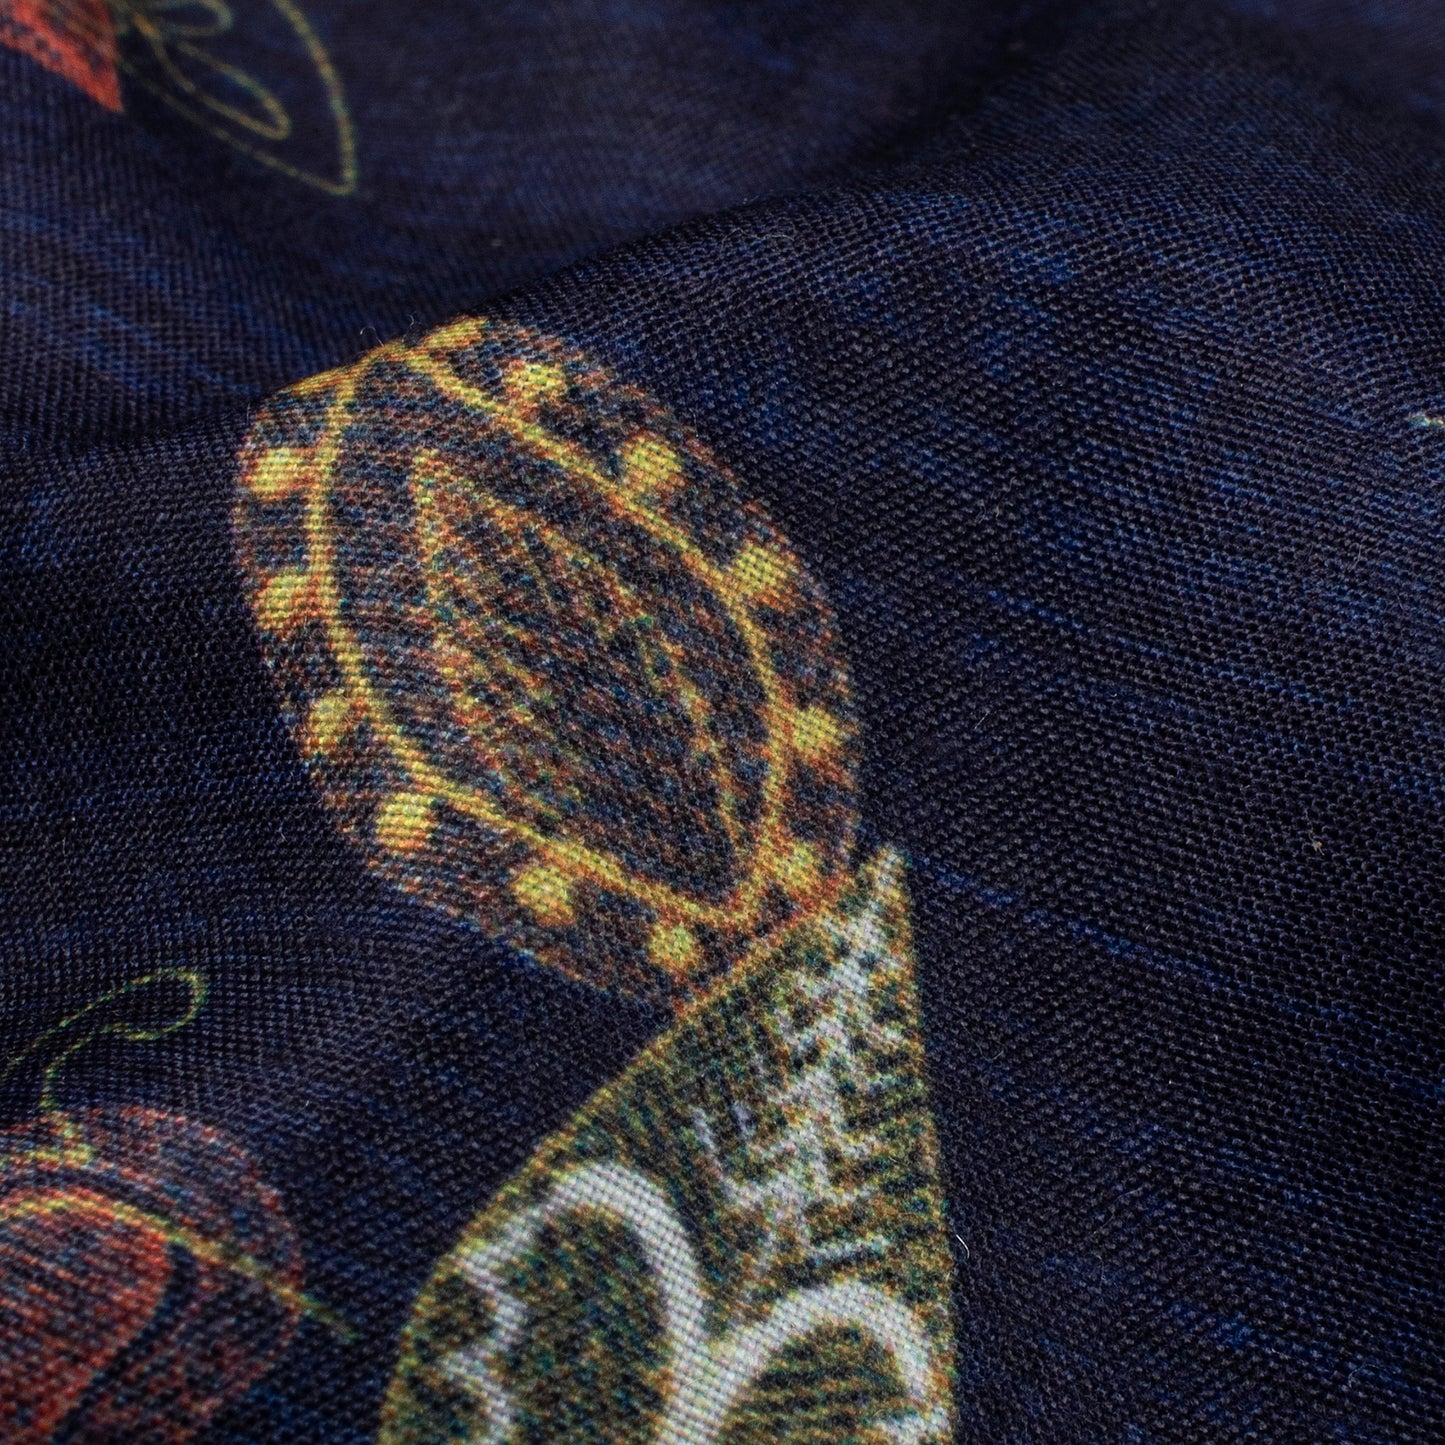 Navy Blue And Orange Leaf Pattern Digital Print Muslin Fabric